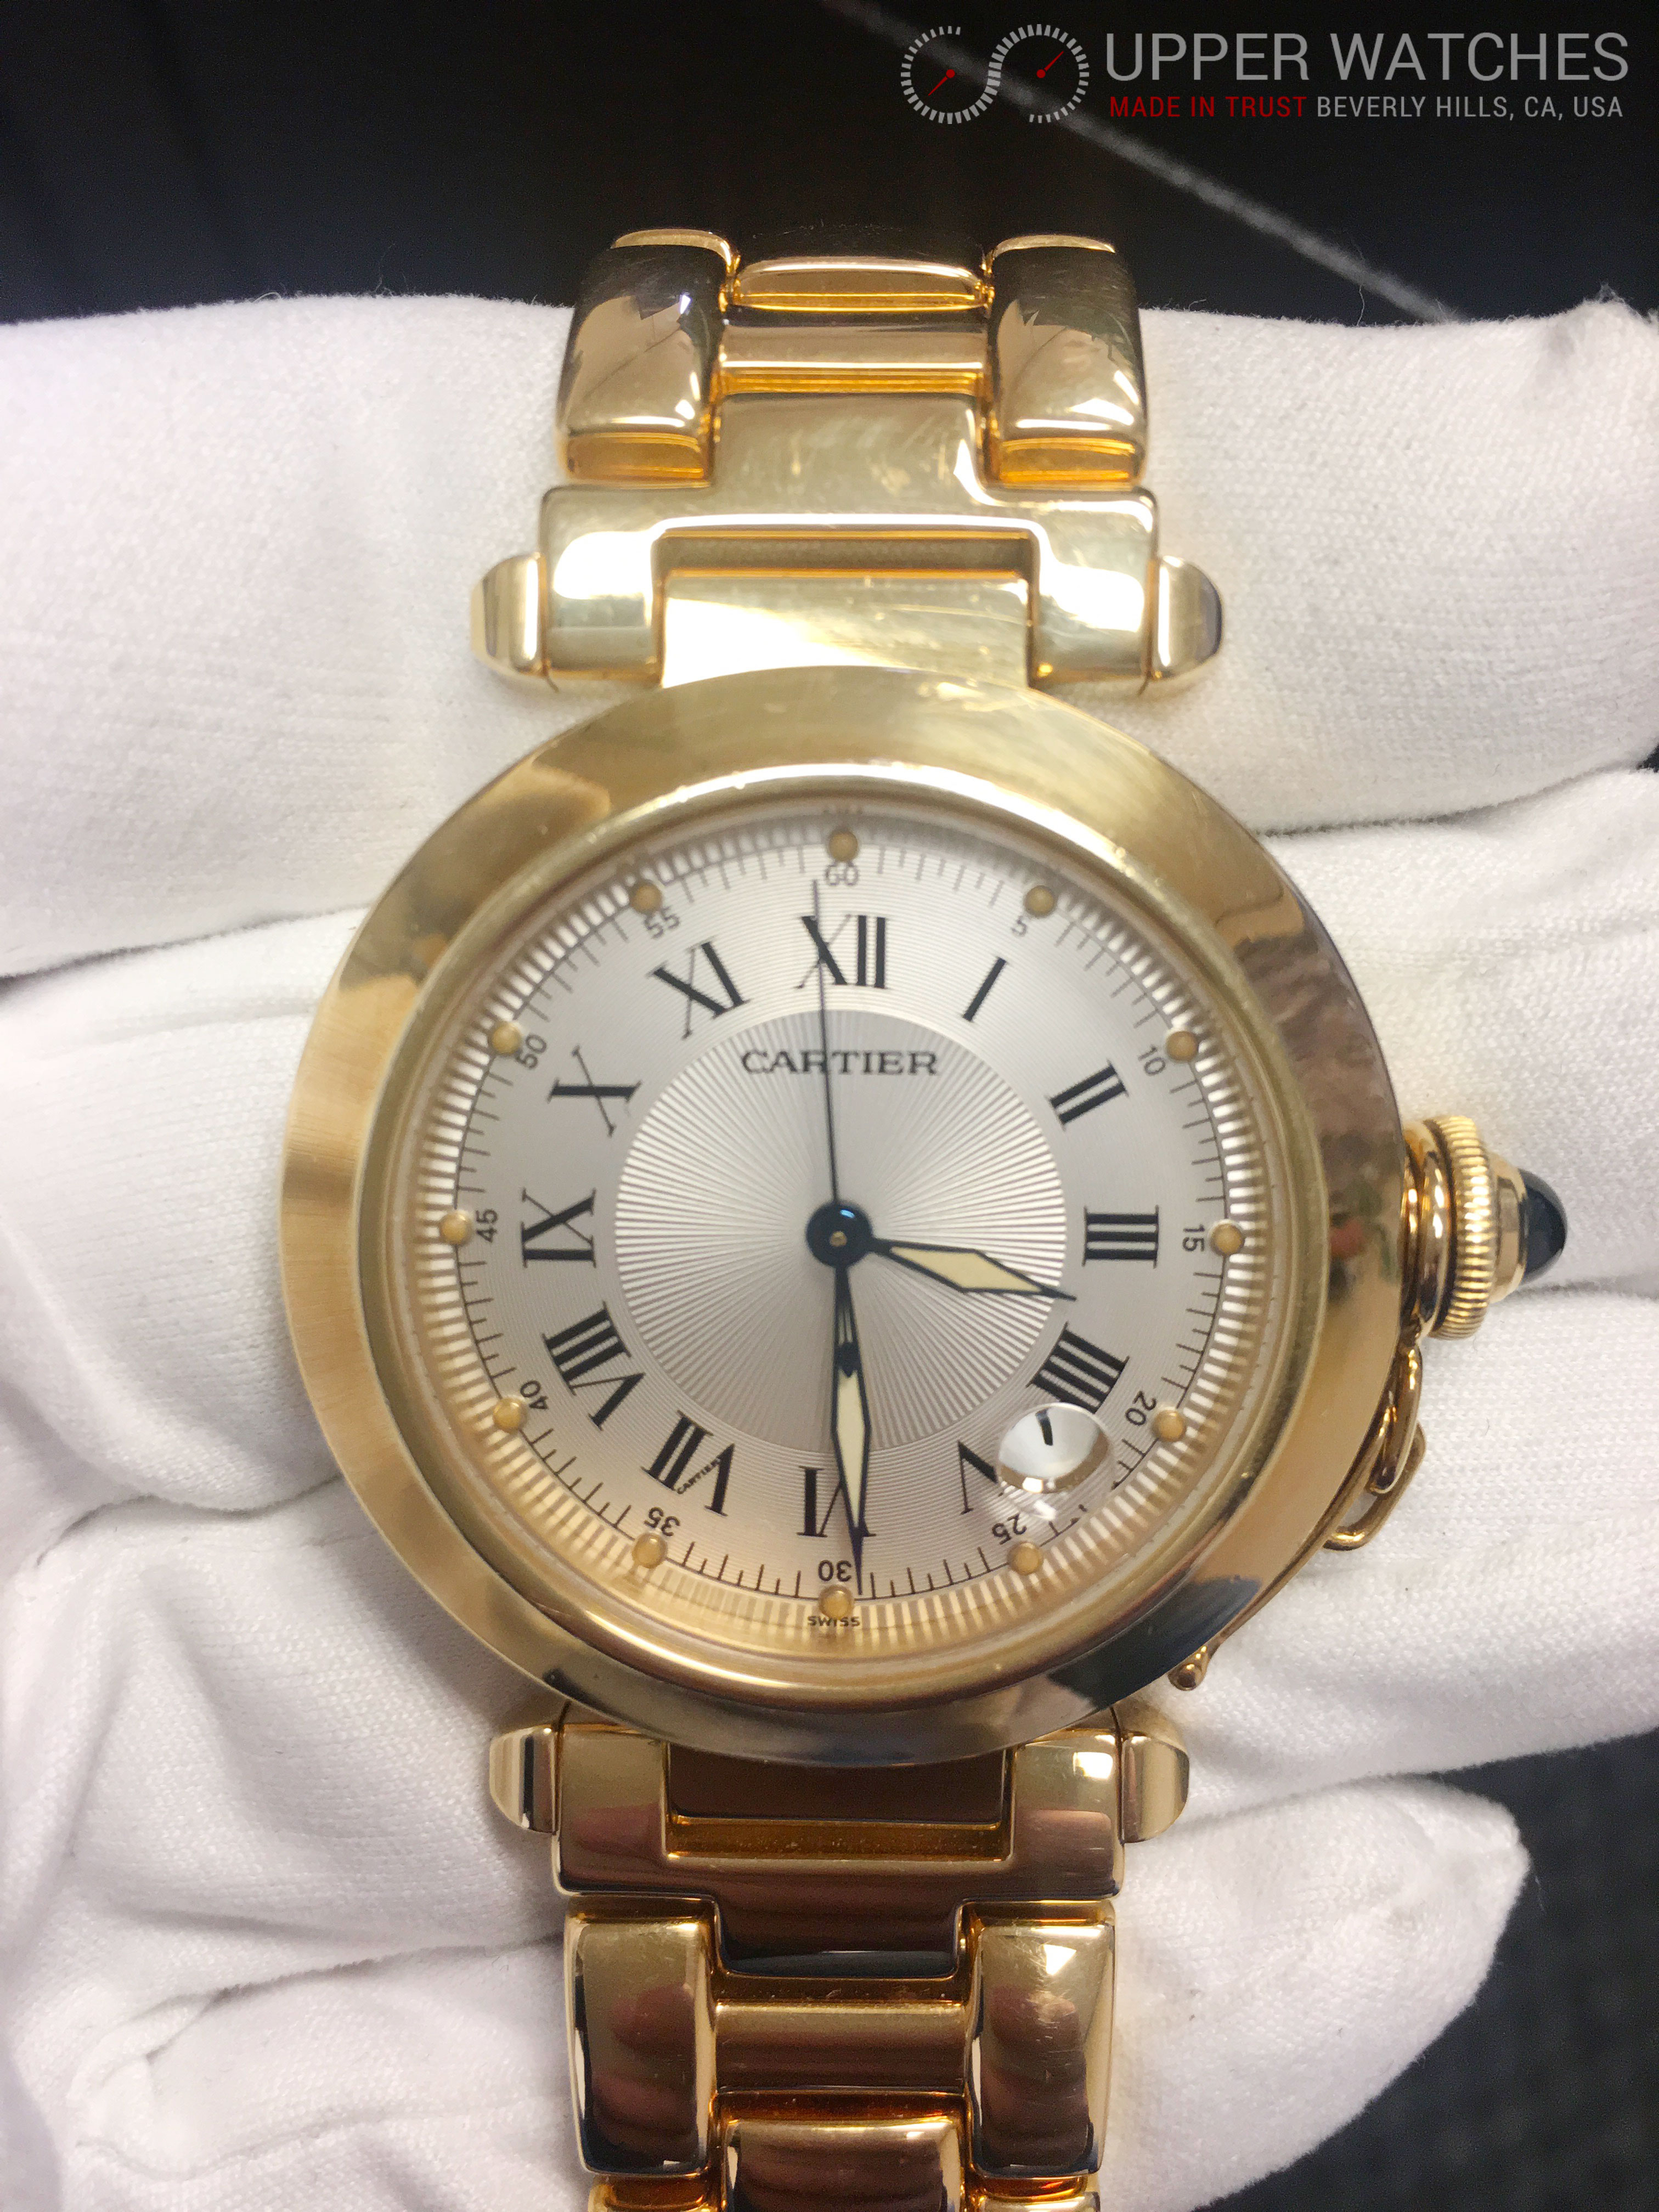 Cartier Pasha 18K Yellow Gold 1028 - Upper Watches